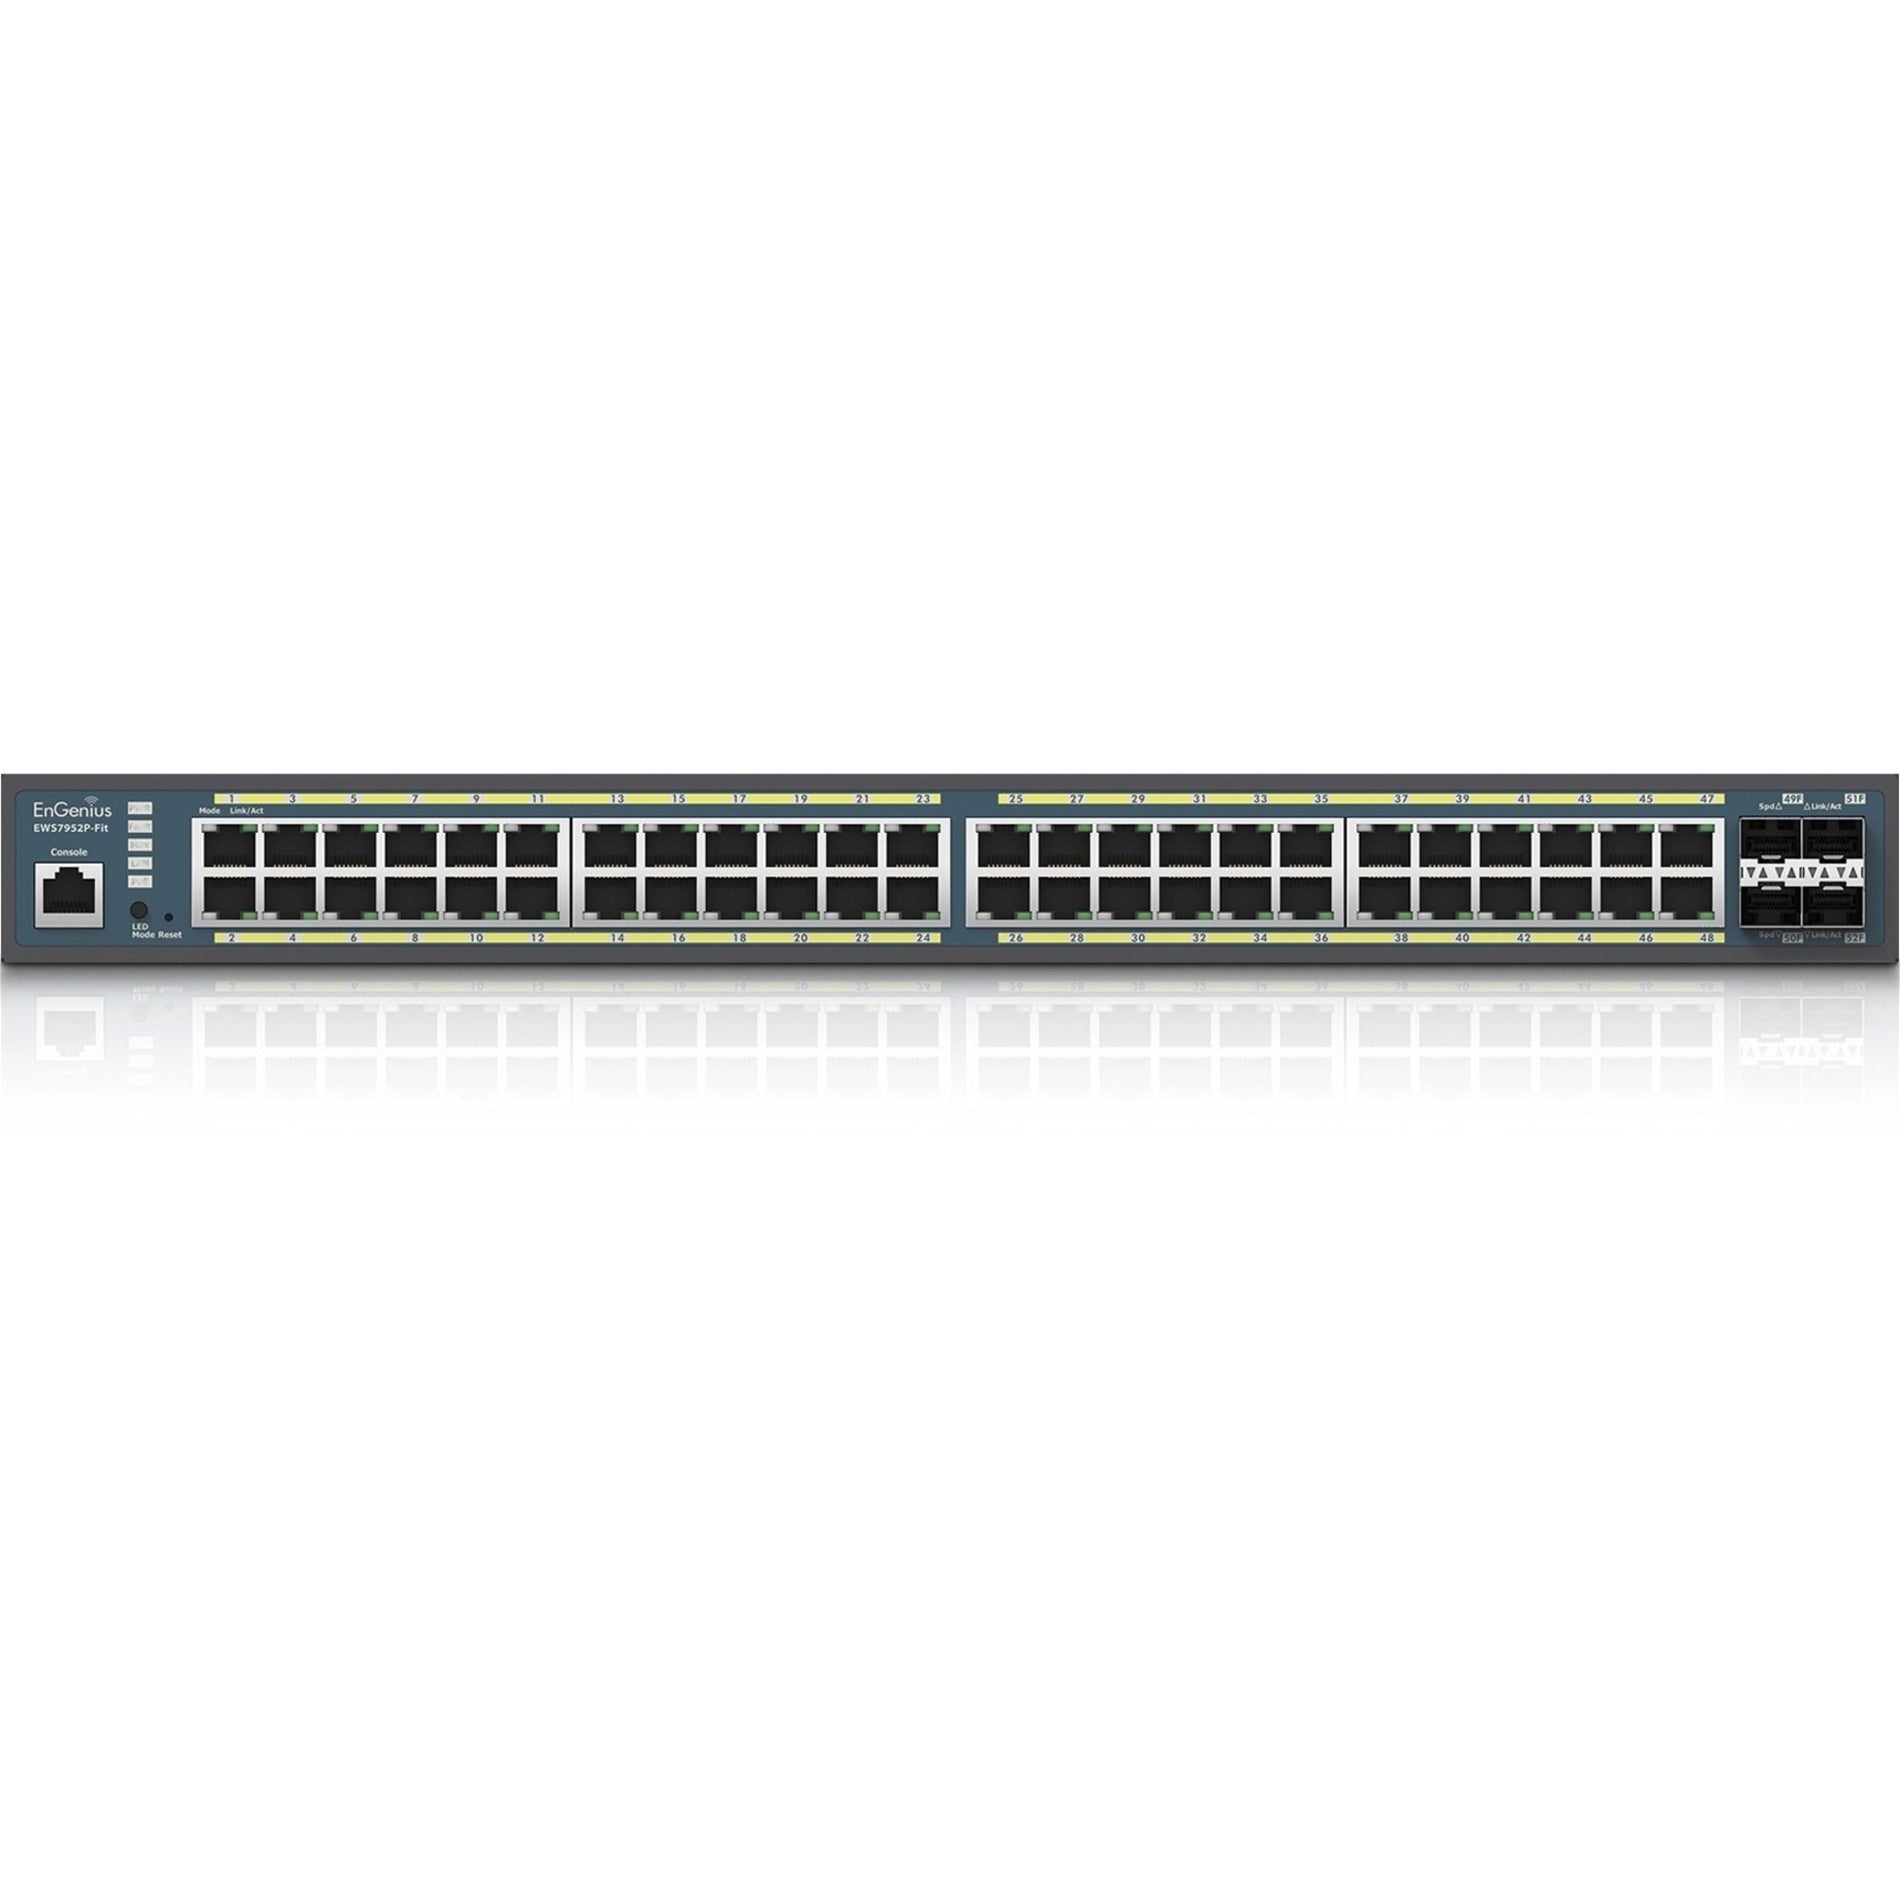 EnGenius EWS7952P-FIT Ethernet Switch, 48 Port Gigabit PoE+ with 4 SFP Slots, 410W PoE Budget